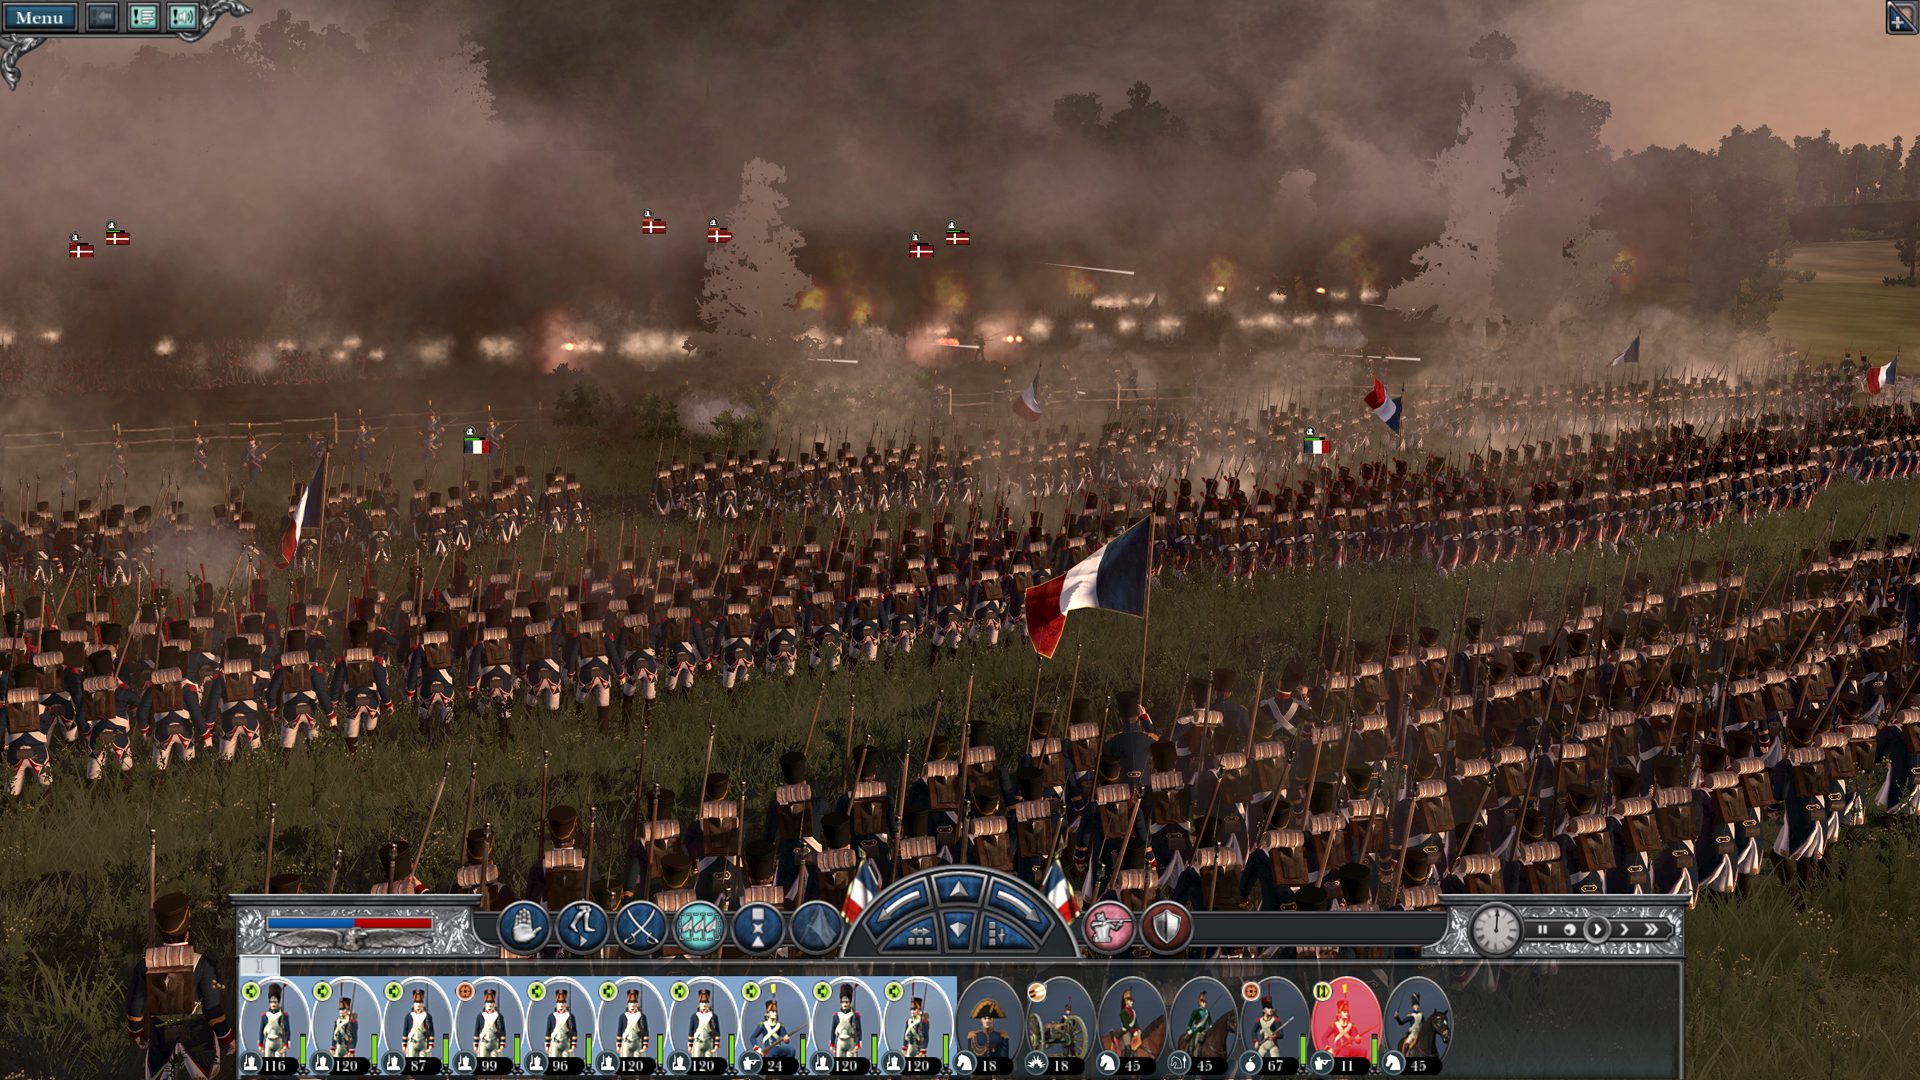 napoleon total war